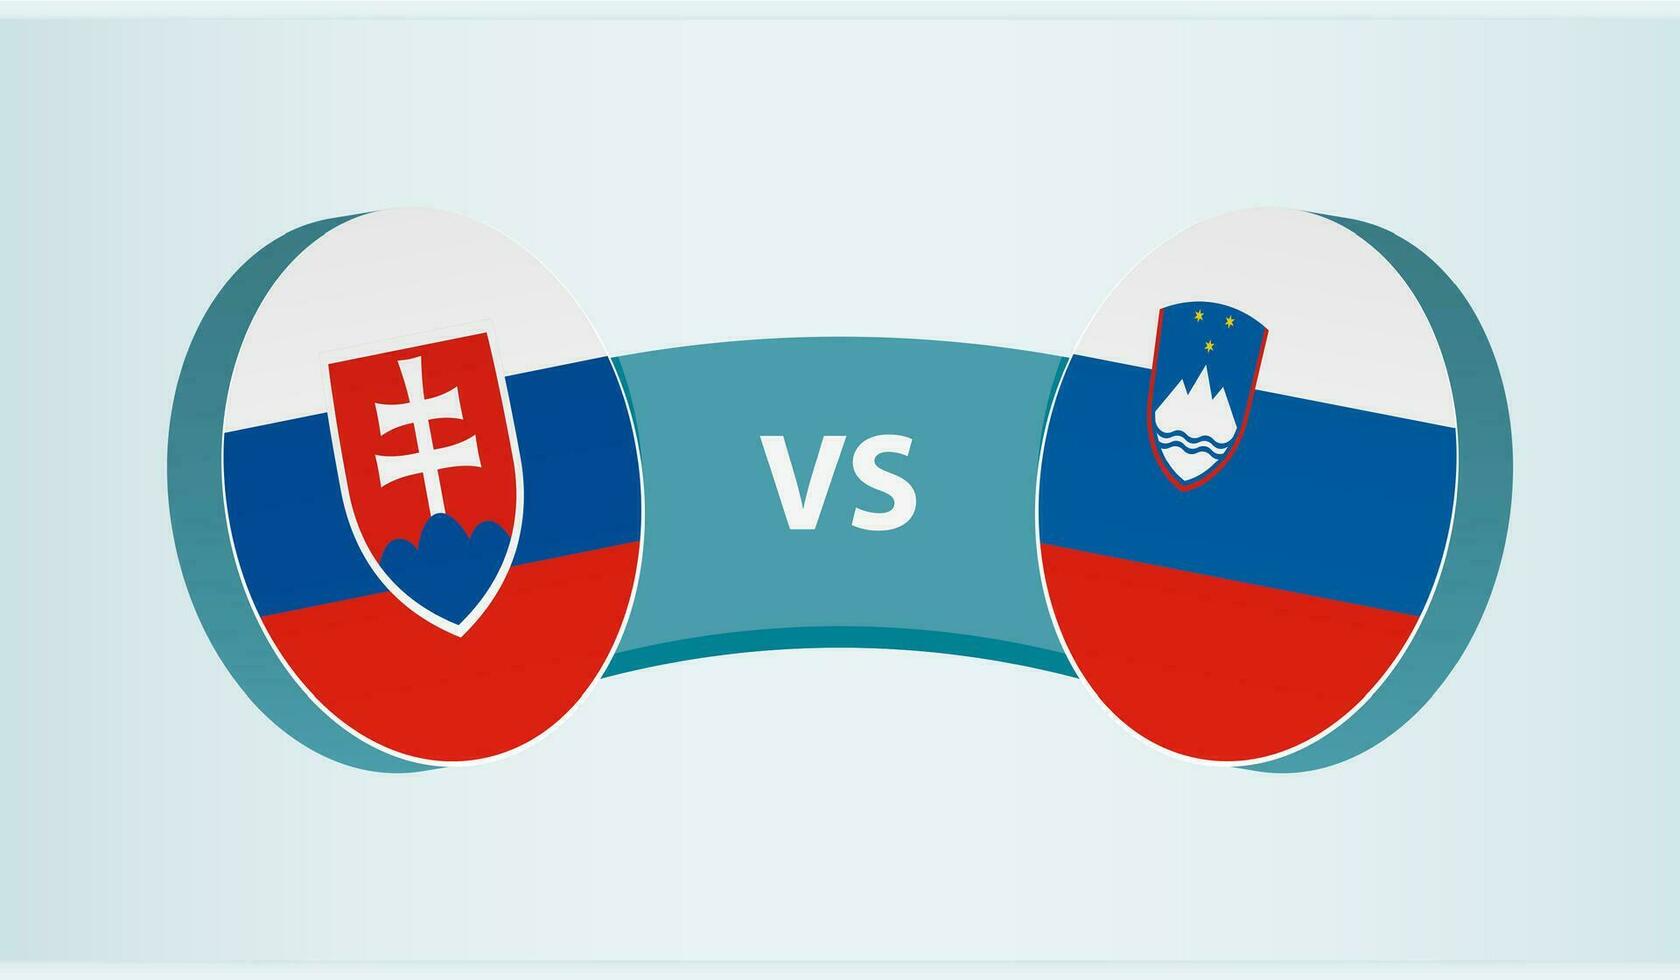 Slovakia versus Slovenia, team sports competition concept. vector